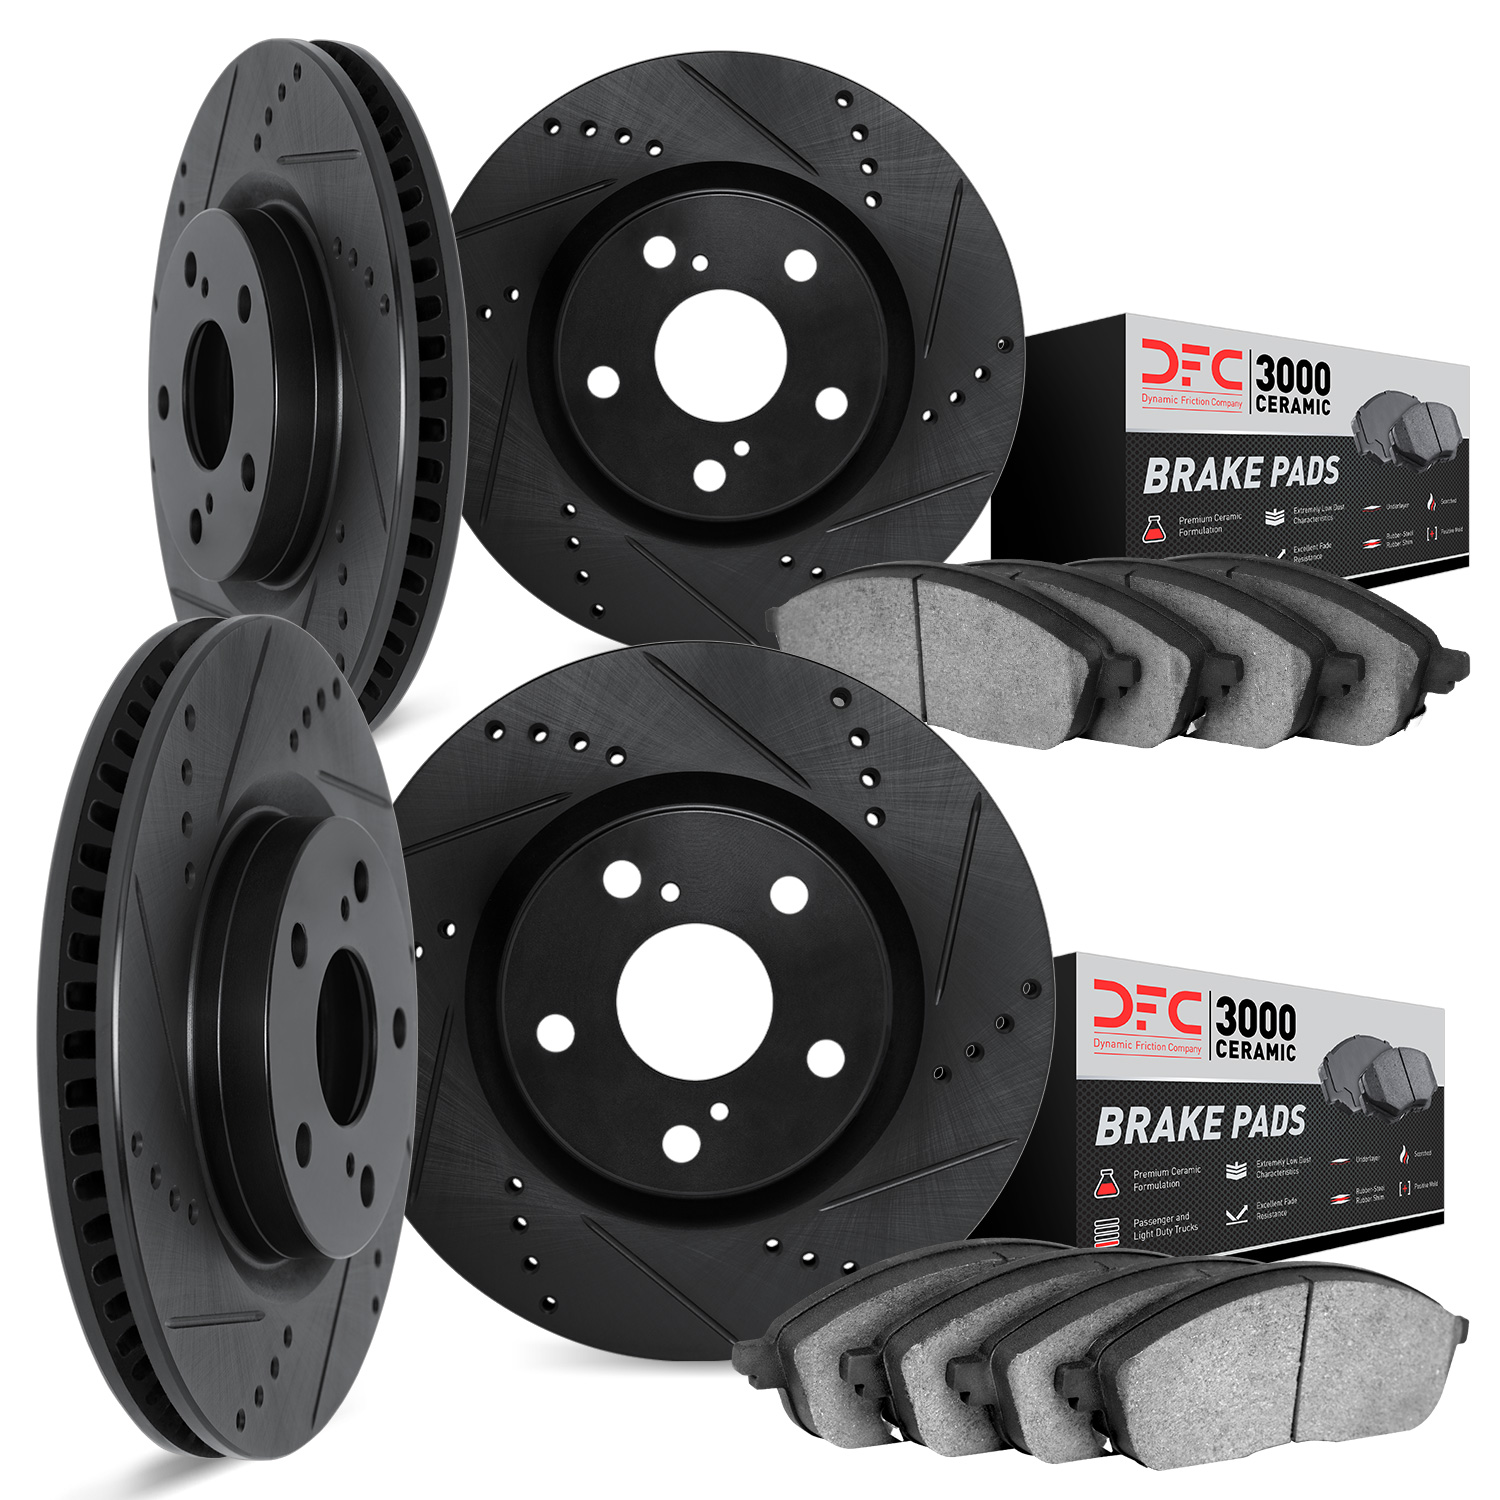 8304-75019 Drilled/Slotted Brake Rotors with 3000-Series Ceramic Brake Pads Kit [Black], 2014-2015 Lexus/Toyota/Scion, Position: